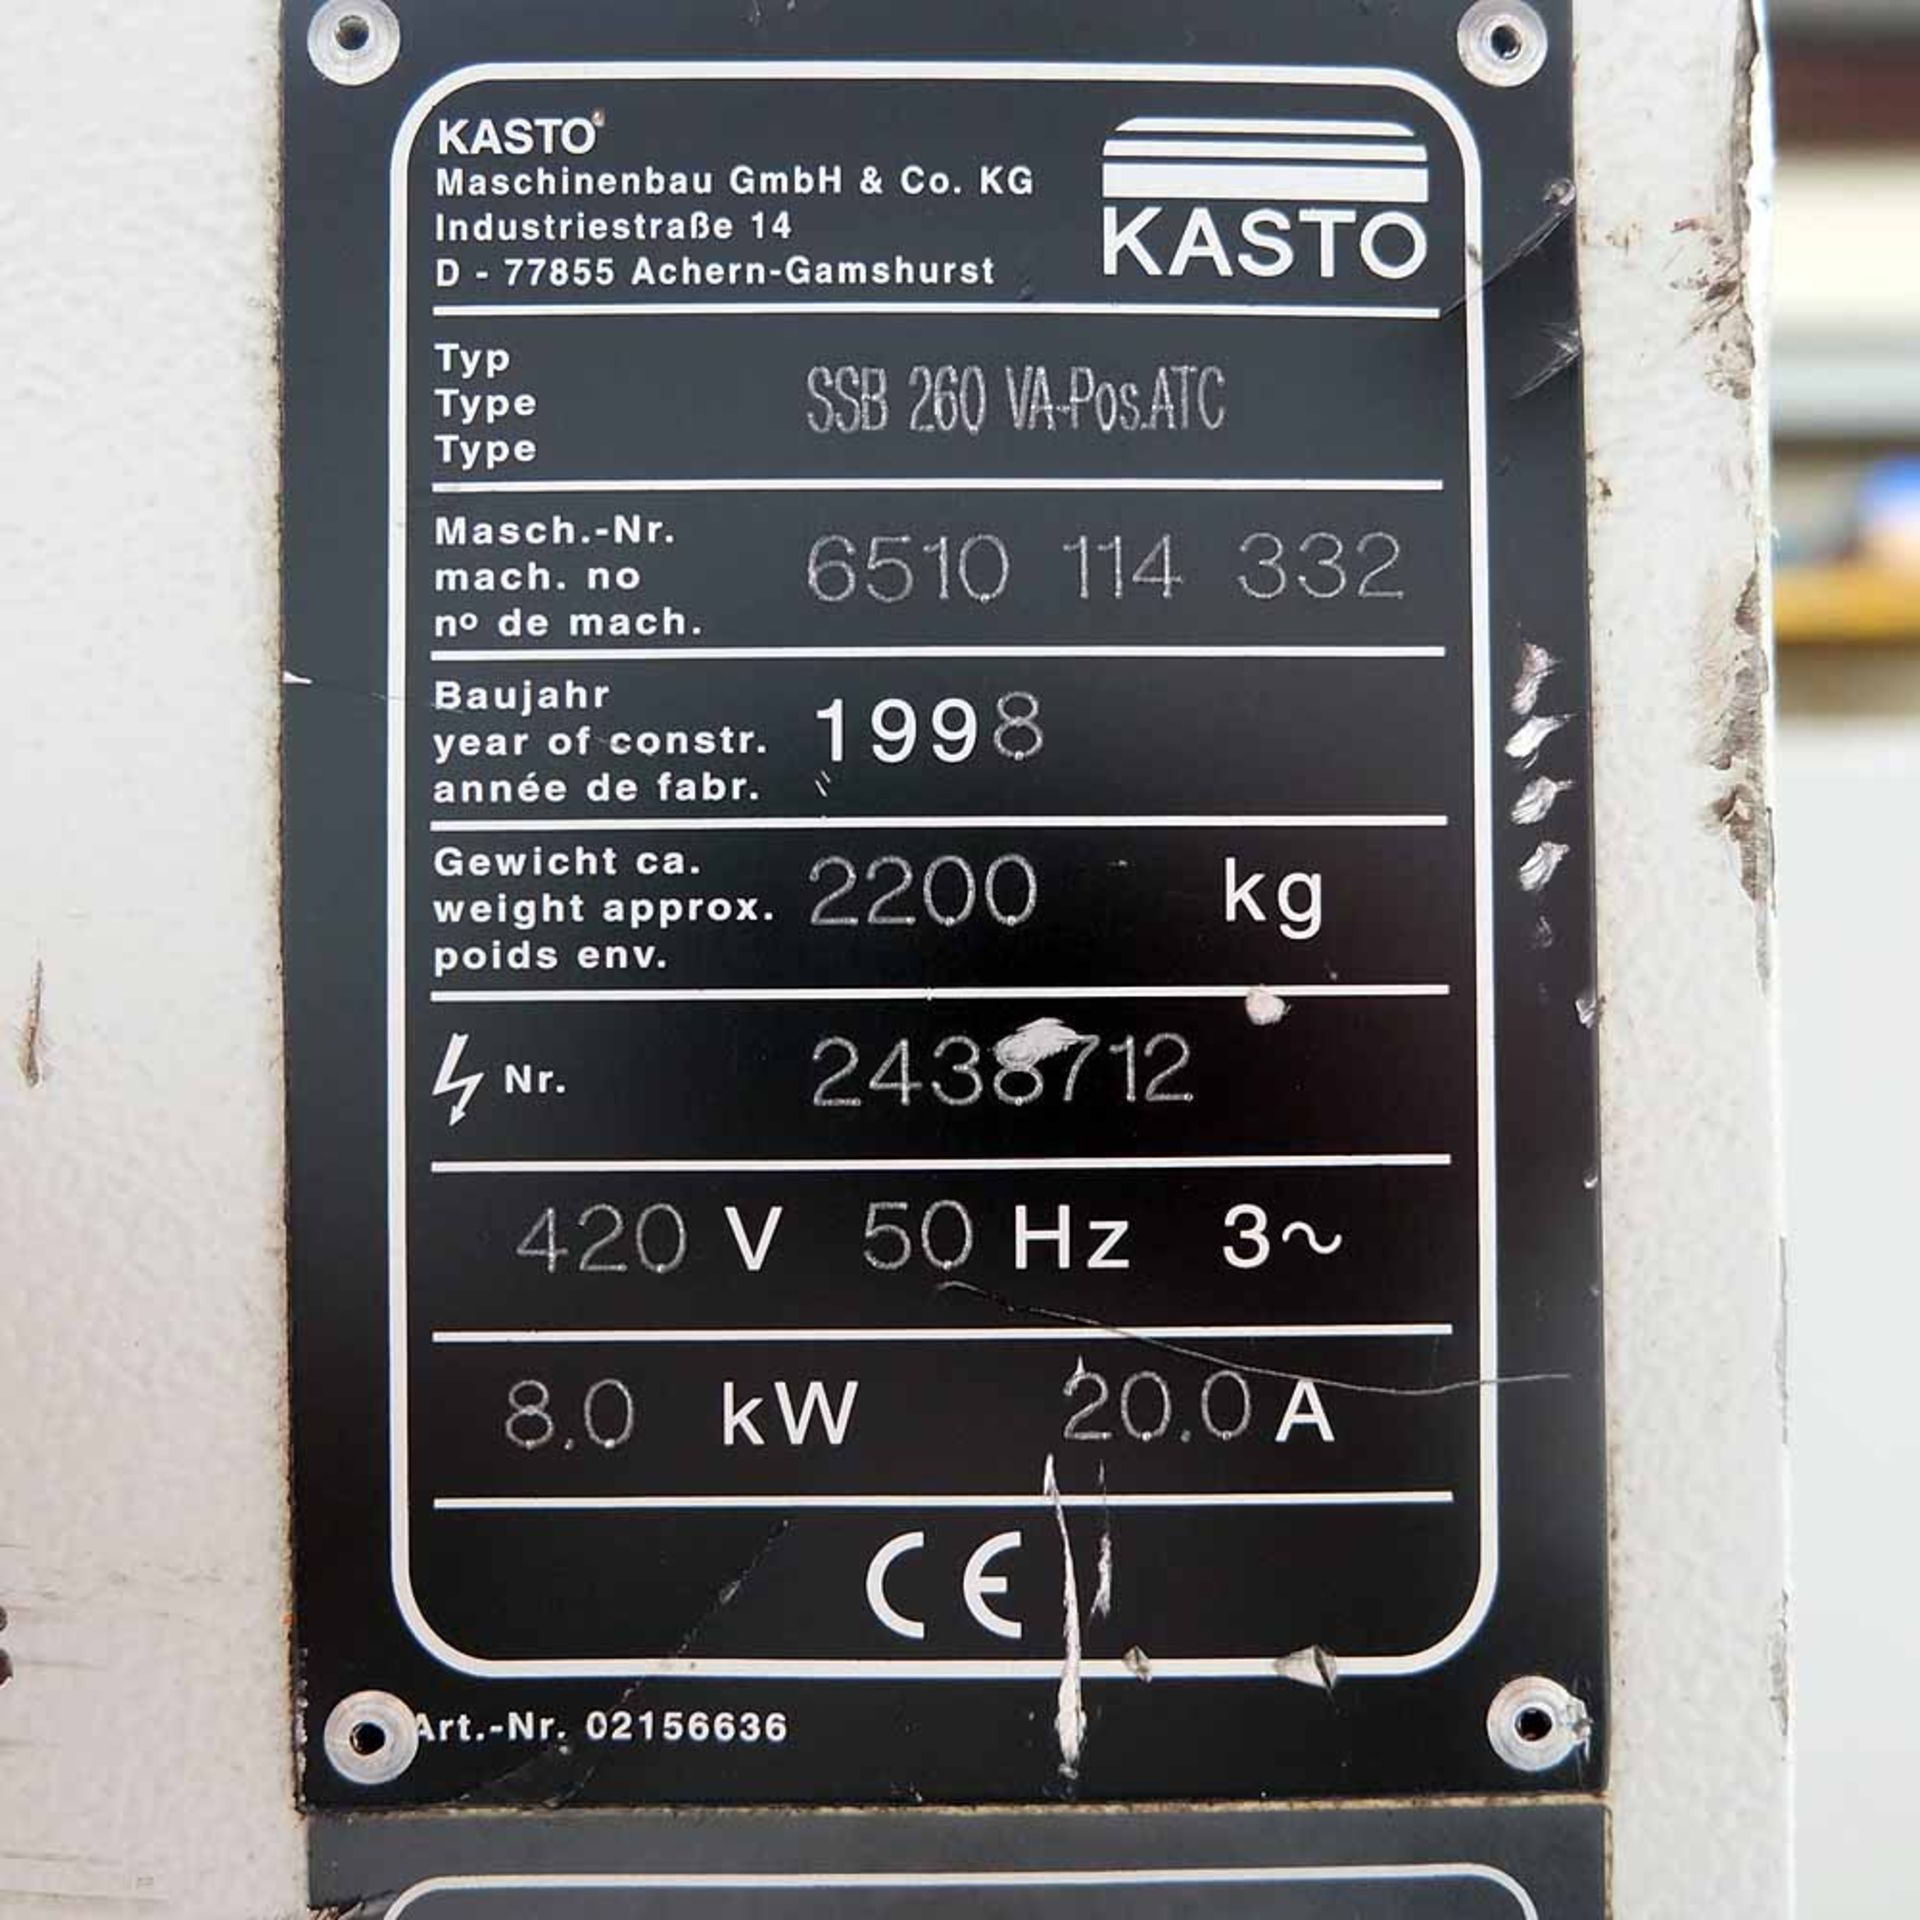 Kasto Type SSB 260 VA-POS.ATC. Fully Automatic Vertical Bandsaw. - Image 13 of 14